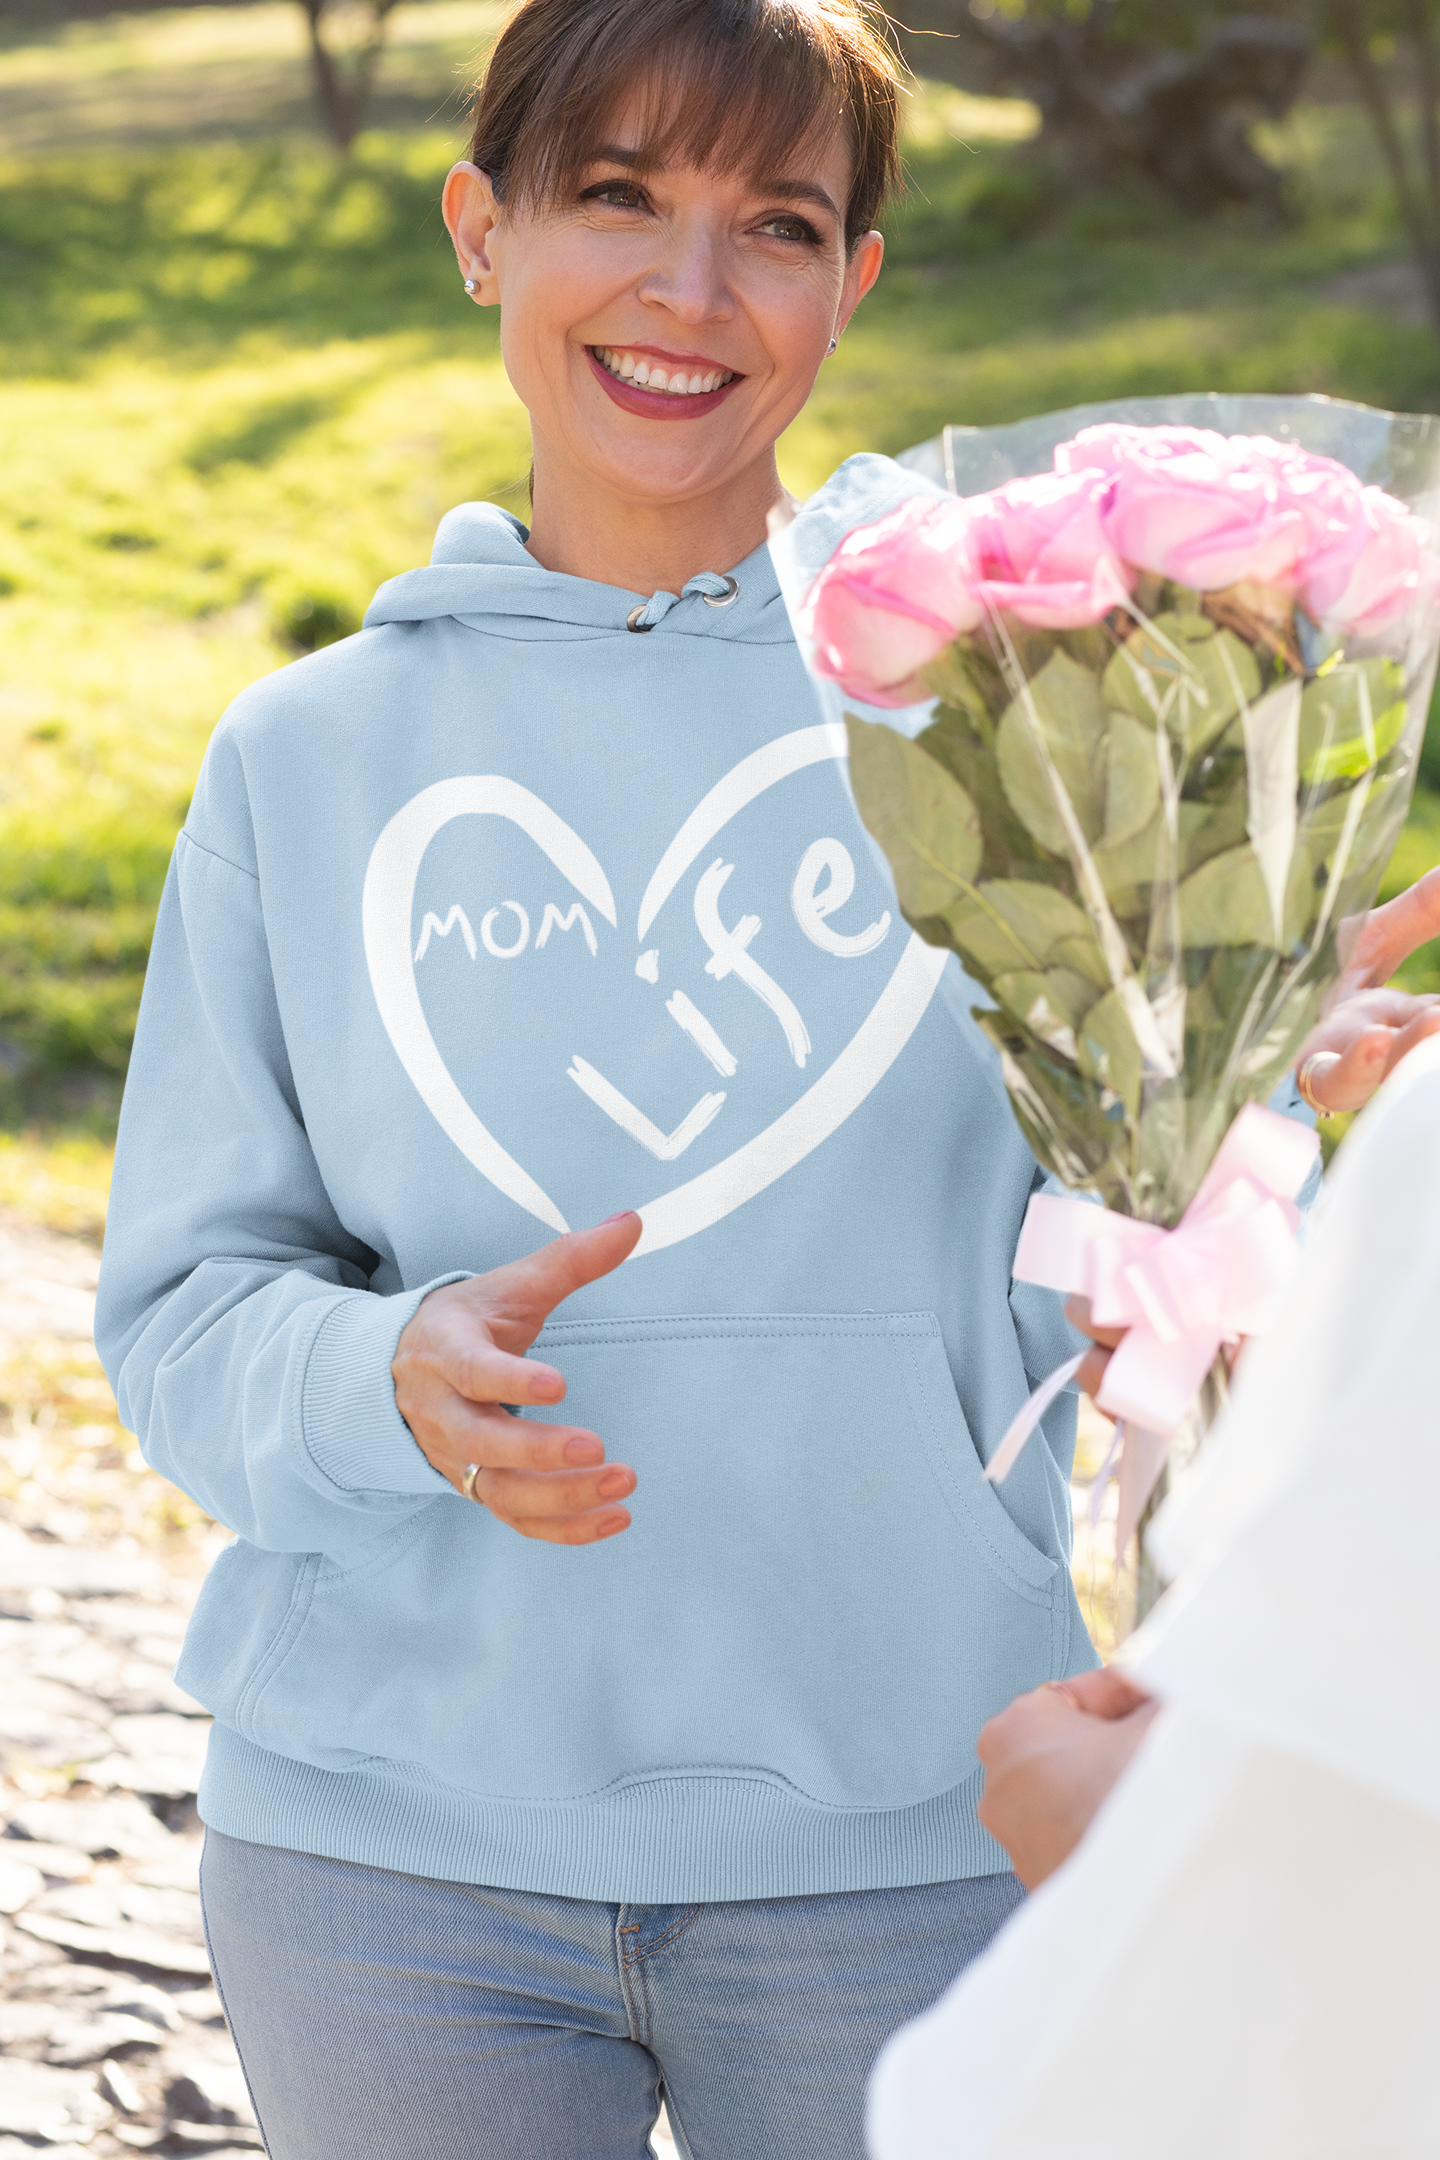 Mom Life Women's Premium Hoodie: A Heartfelt Tribute to Motherhood 🌷 - Stylish & Cozy Fashion Statement